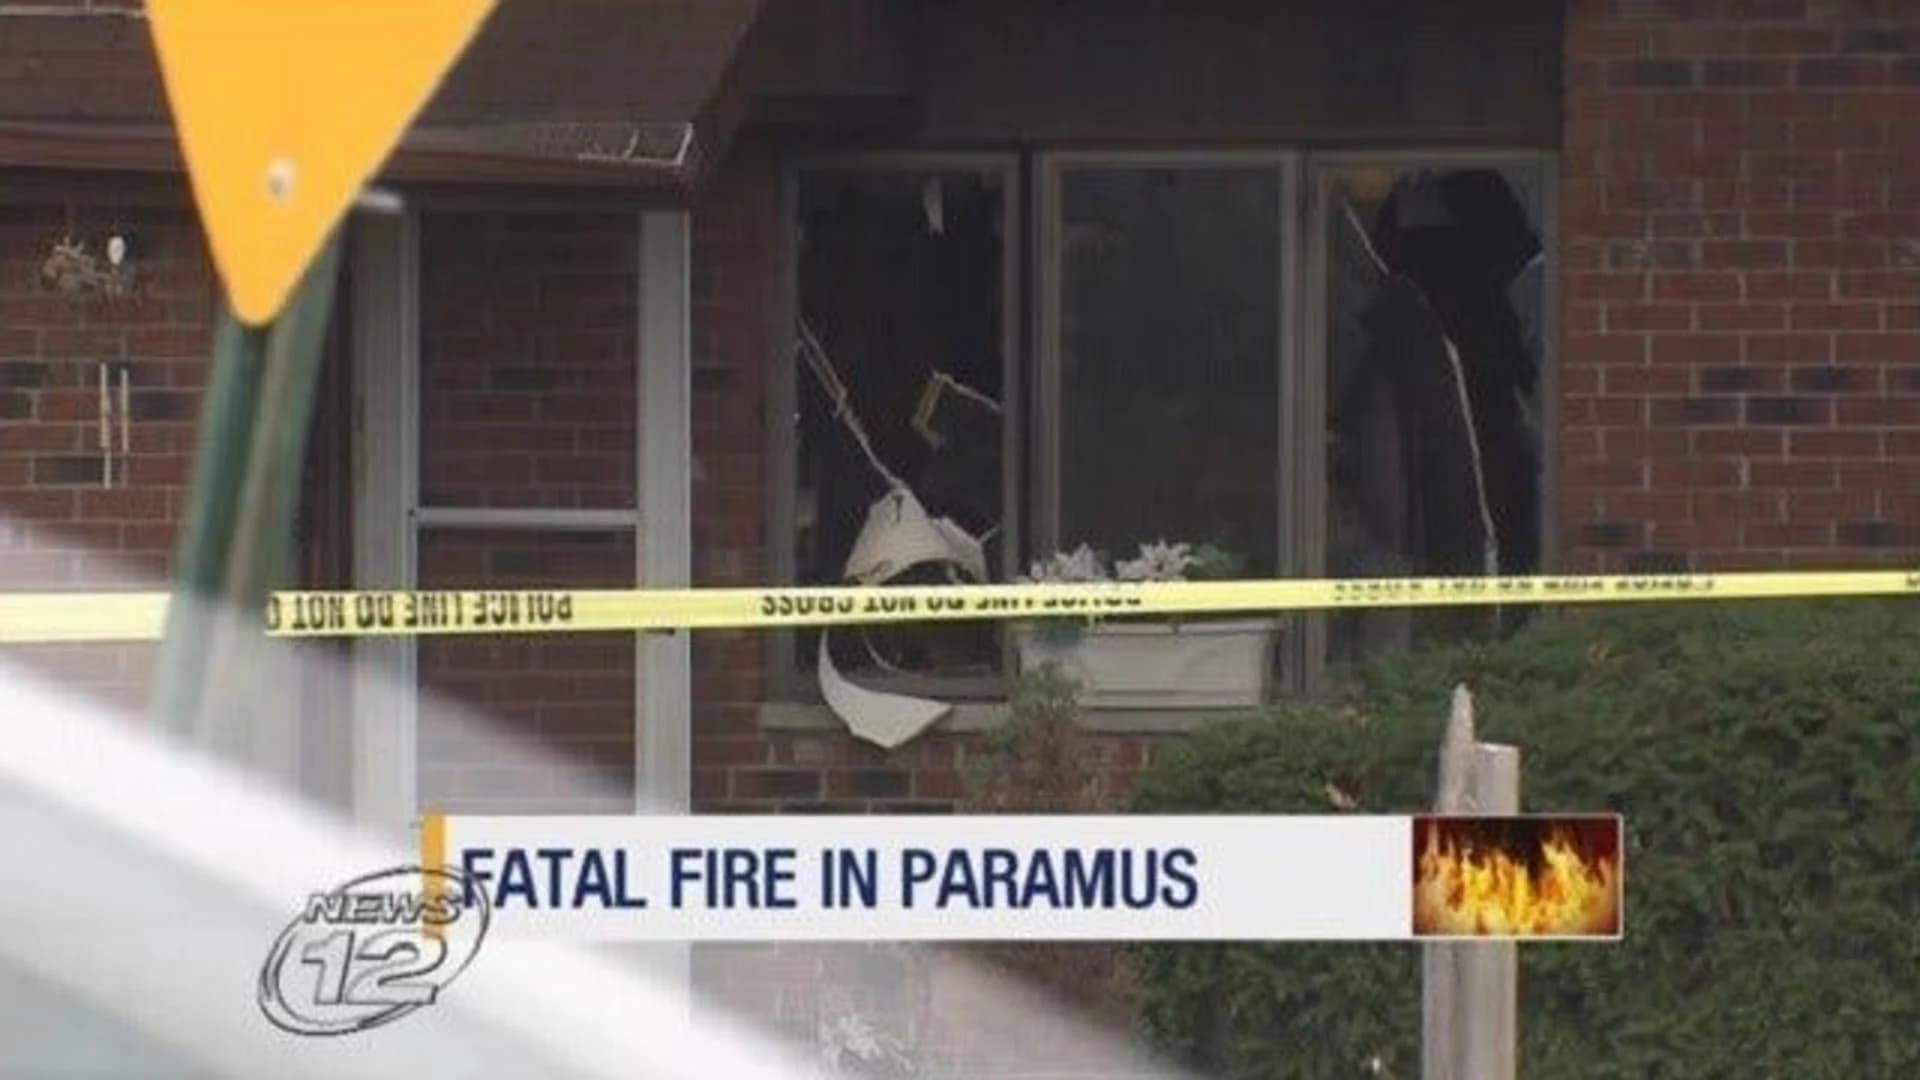 Apartment fire victim identified as Paramus man